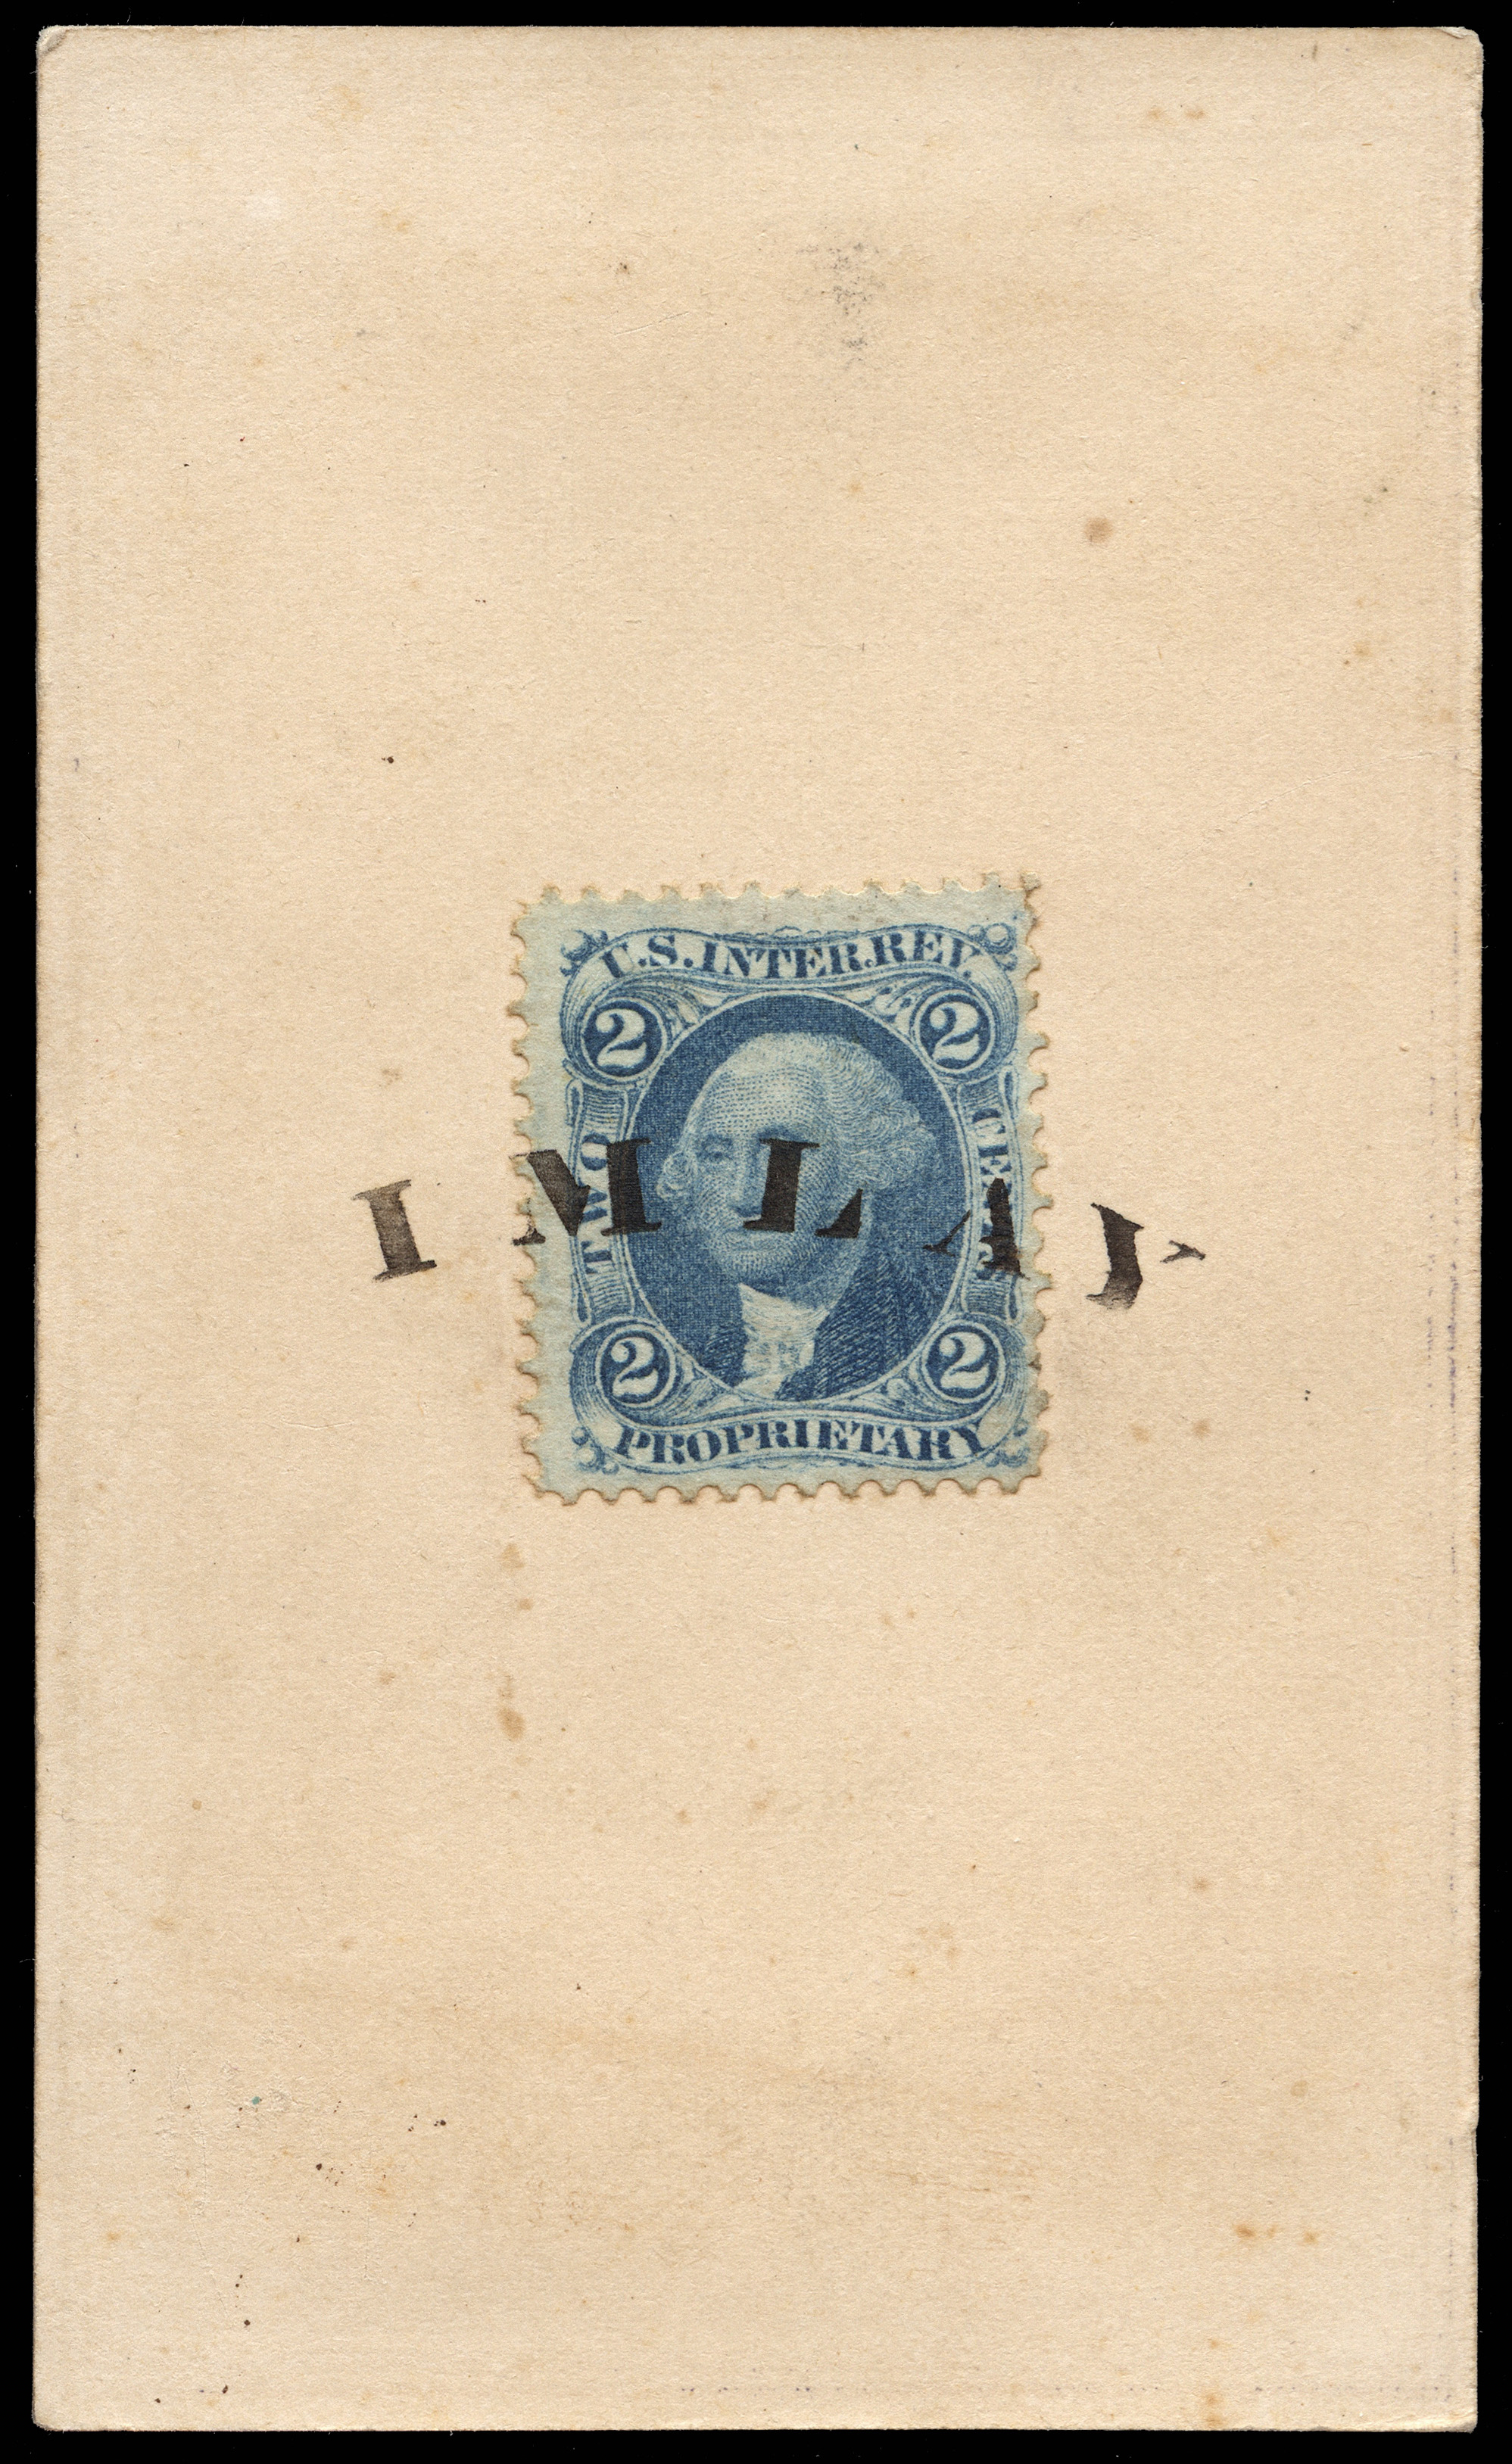 R13c - 2c Proprietary, blue, perforated - U.S. Civil War Revenue Stamps ...